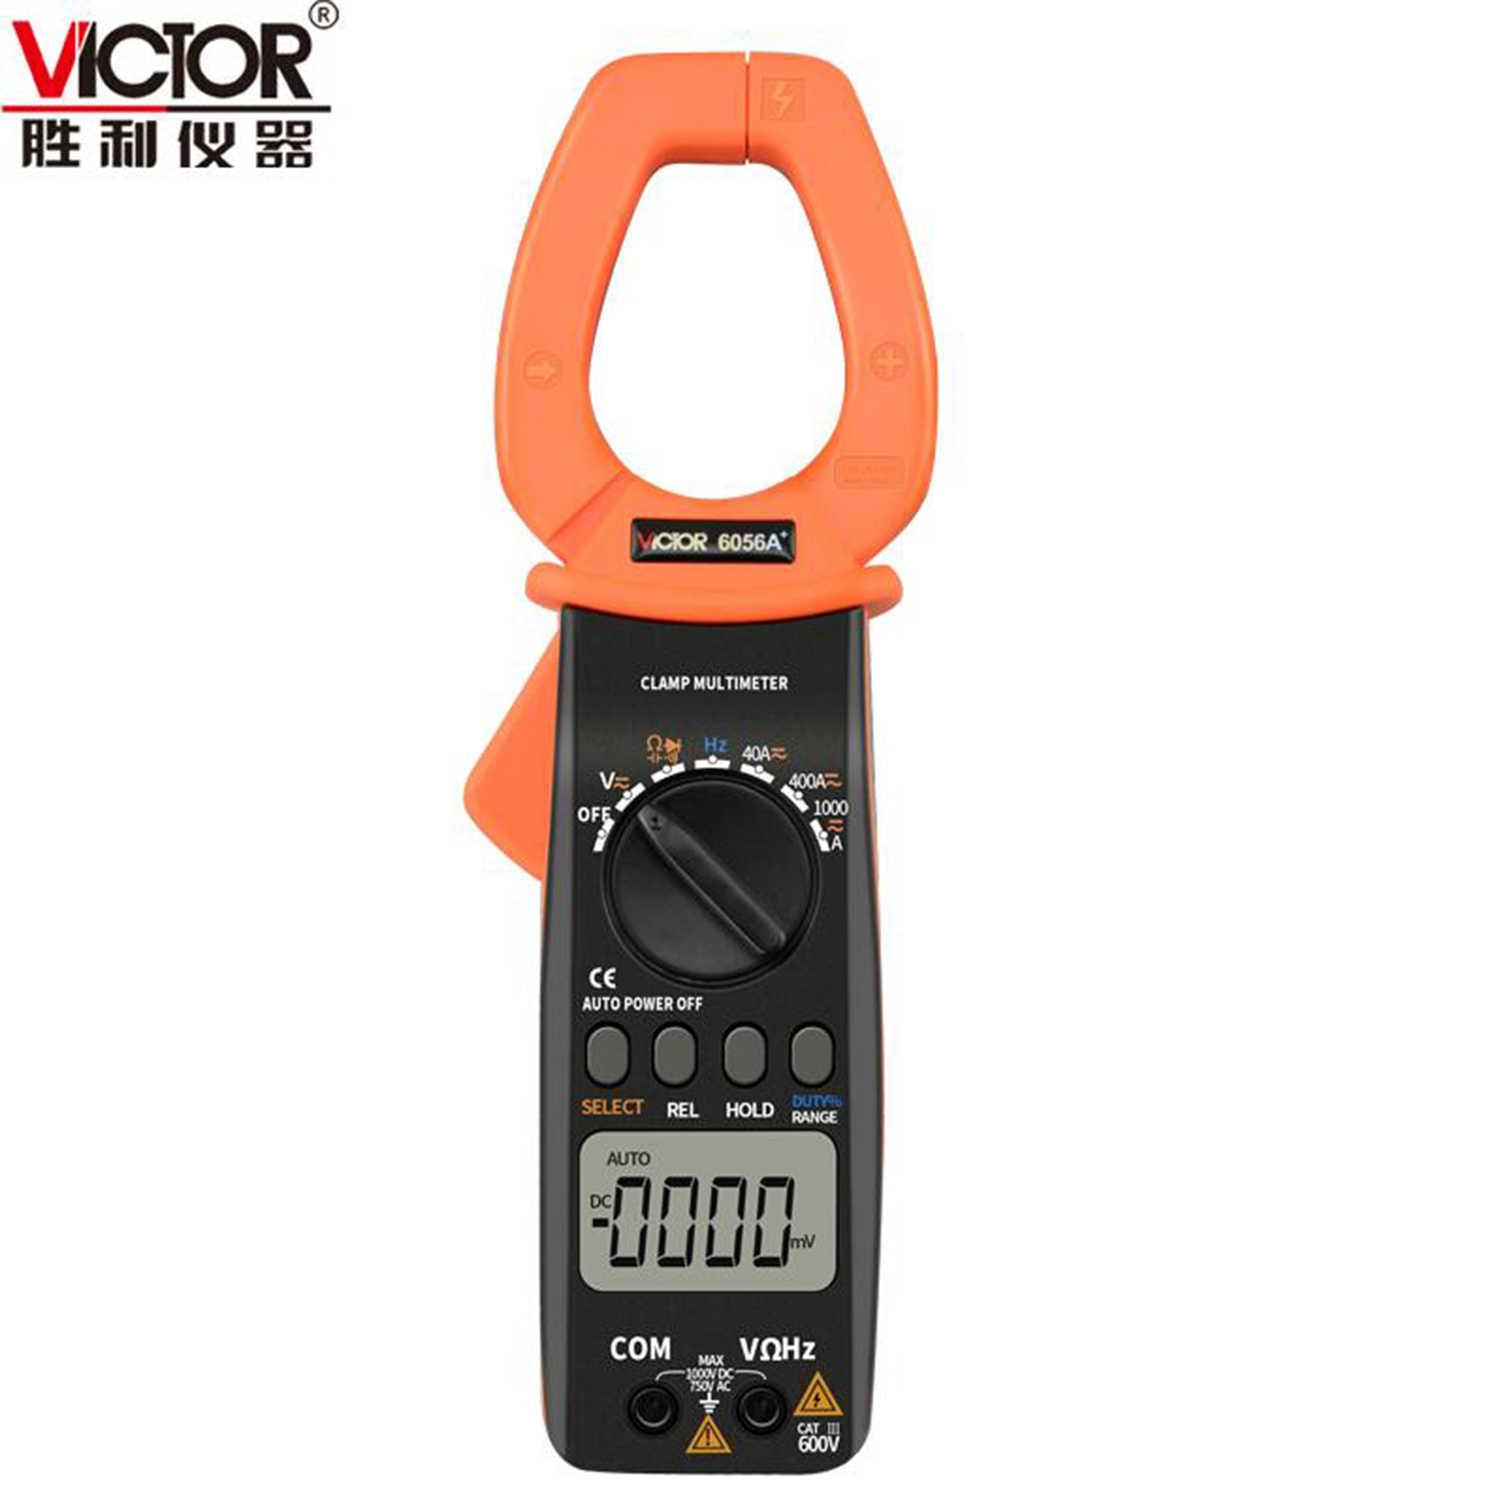 VICTOR VC6056B VC6056A plus VC6056C plus VC6056E True RMS Digital Clamp Meters Current Meter AC DC Voltage Resistance Ammeter.